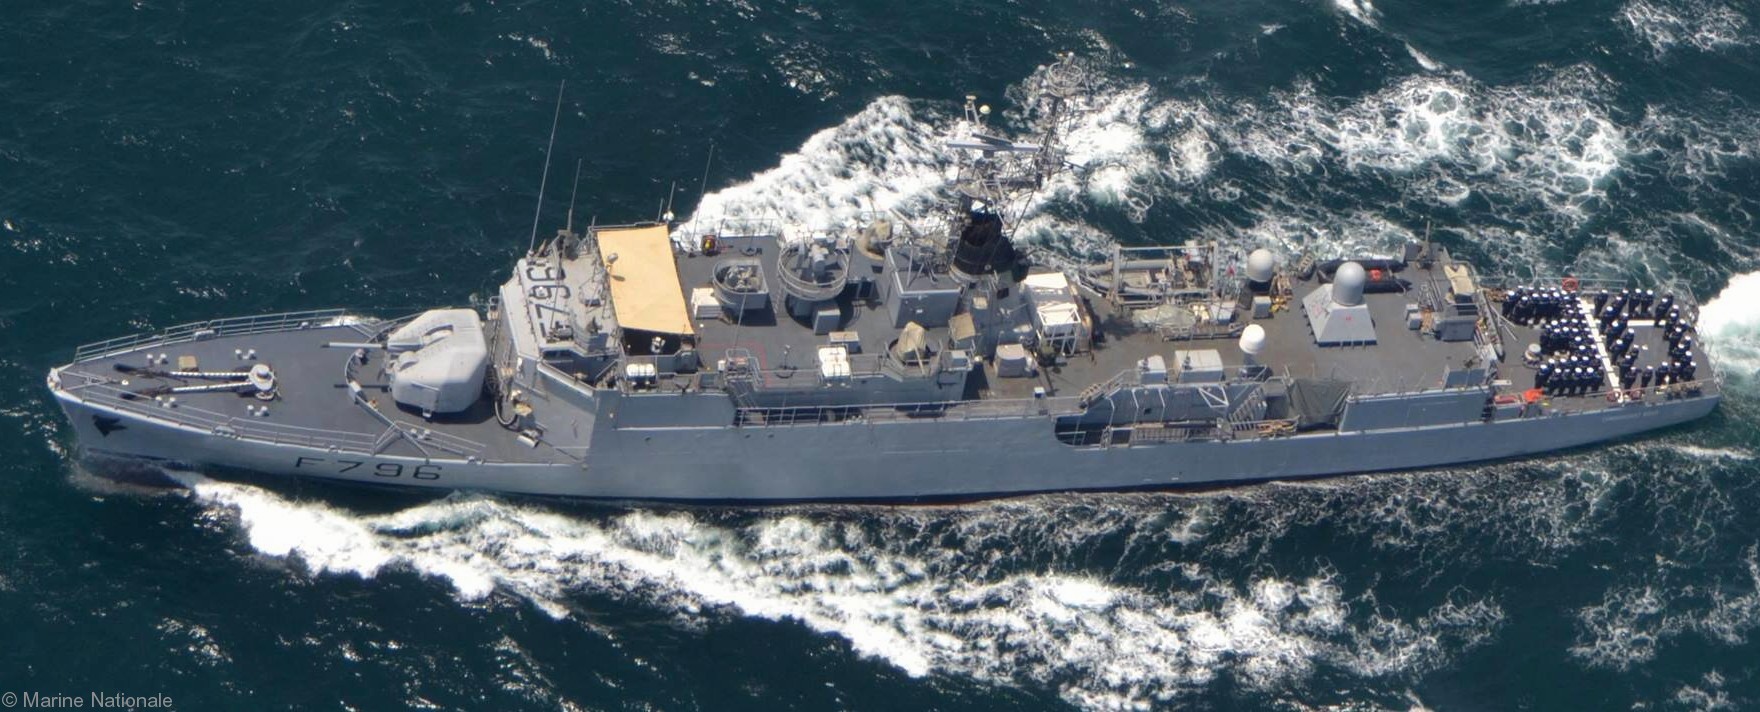 f-796 fs commandant birot d'estienne d'orves class corvette type a69 aviso french navy marine nationale 05